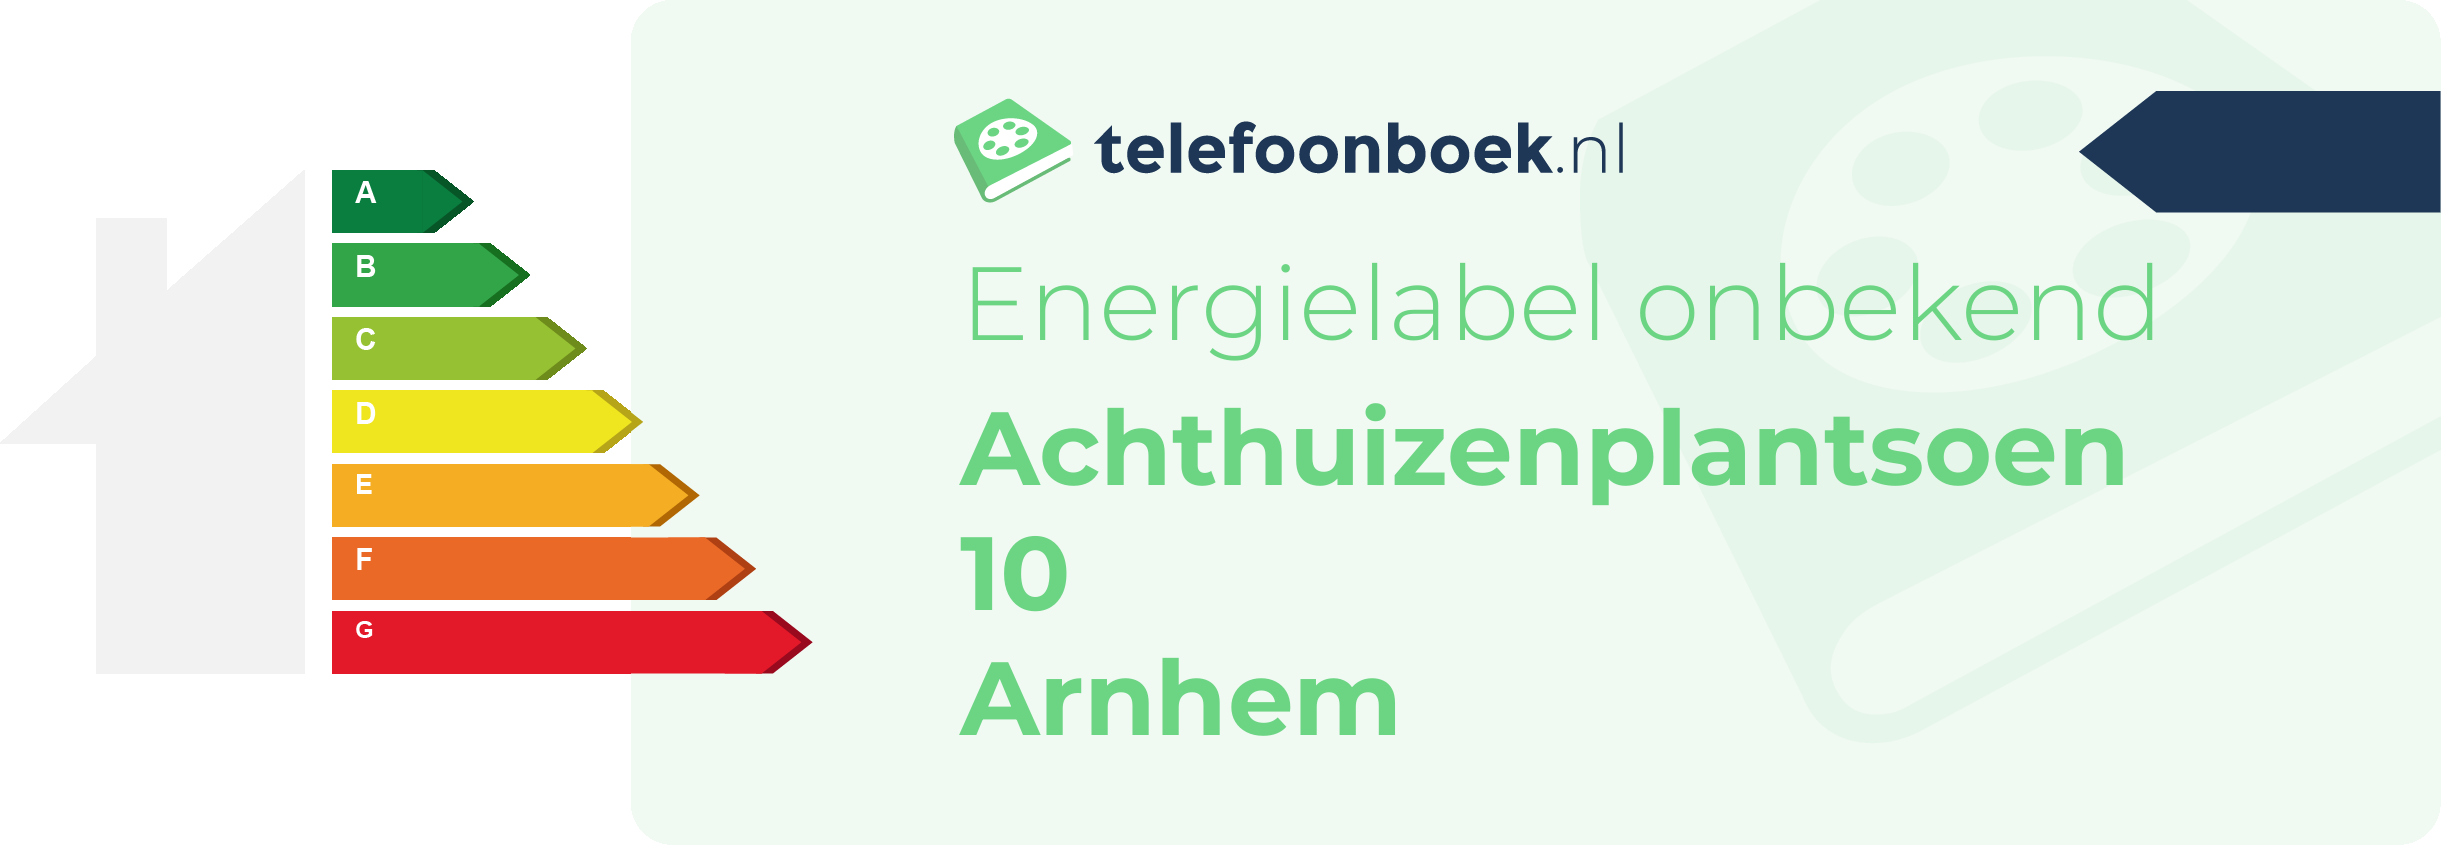 Energielabel Achthuizenplantsoen 10 Arnhem